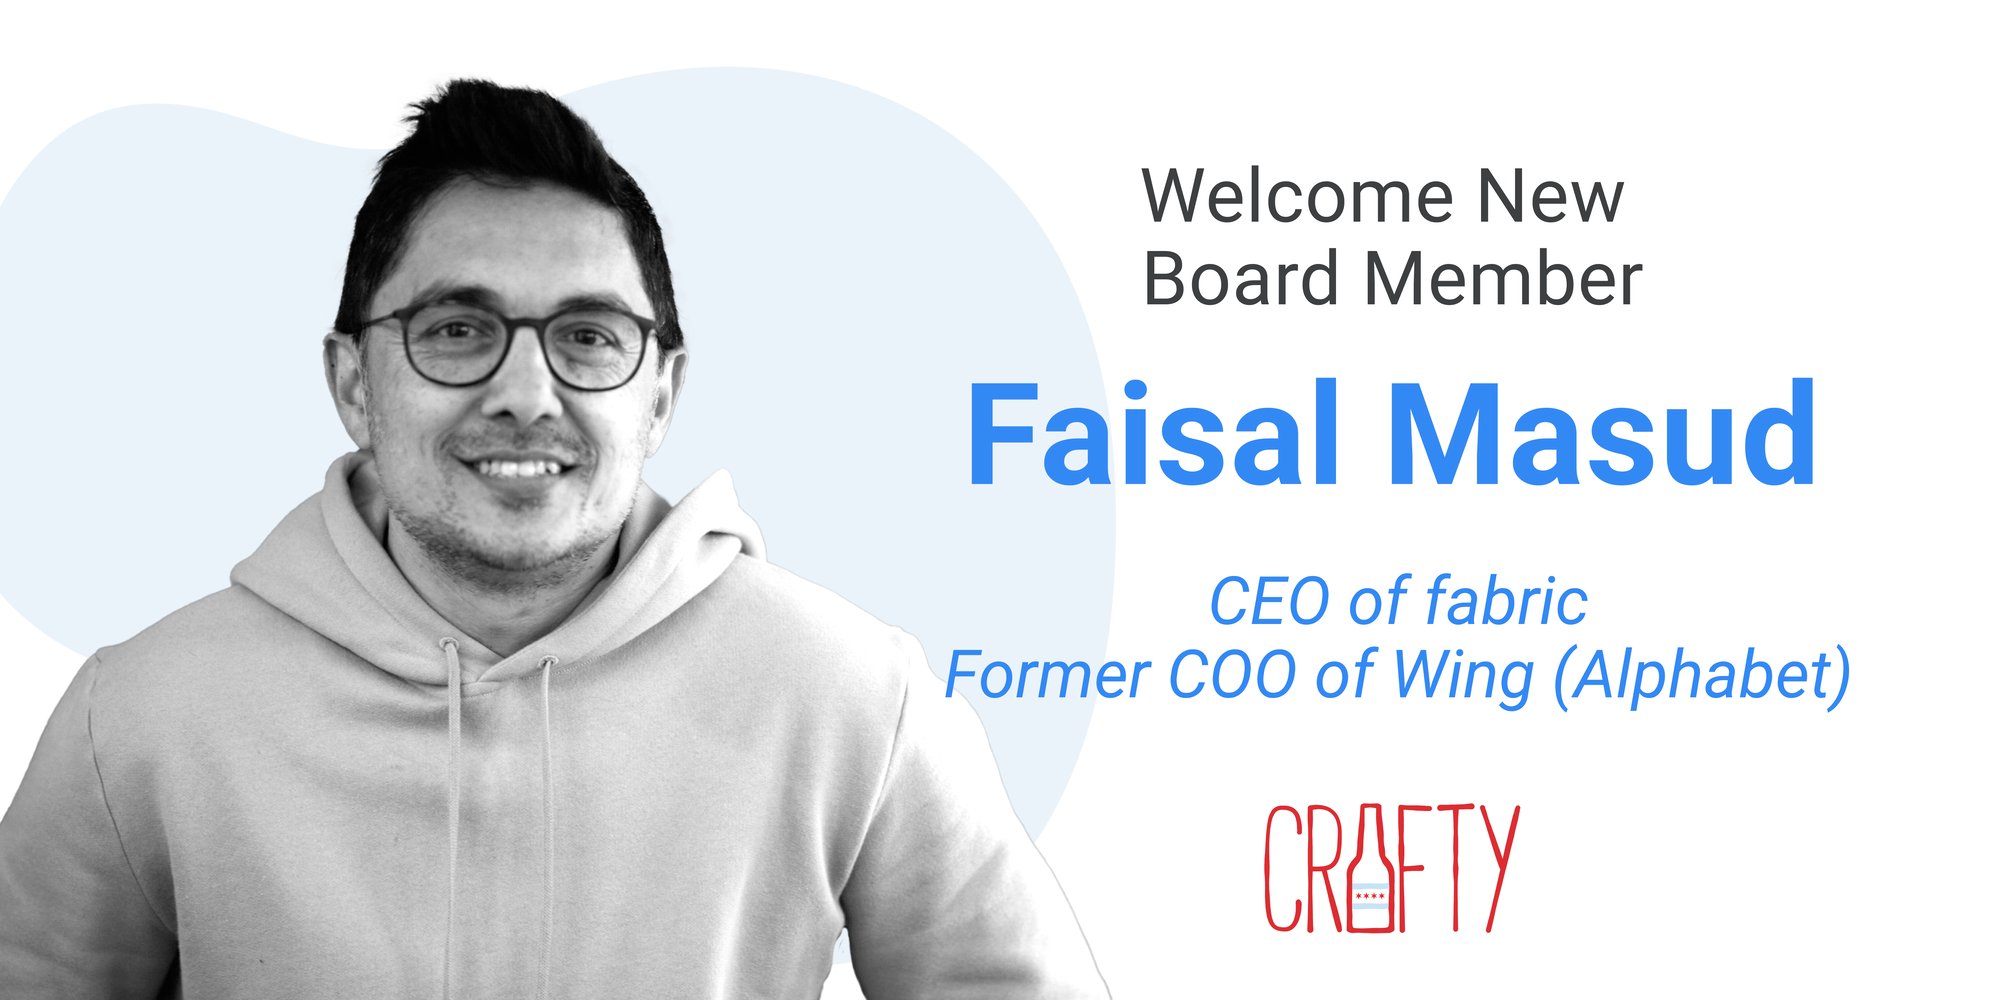 Faisal Masud joins Crafty's board of directors